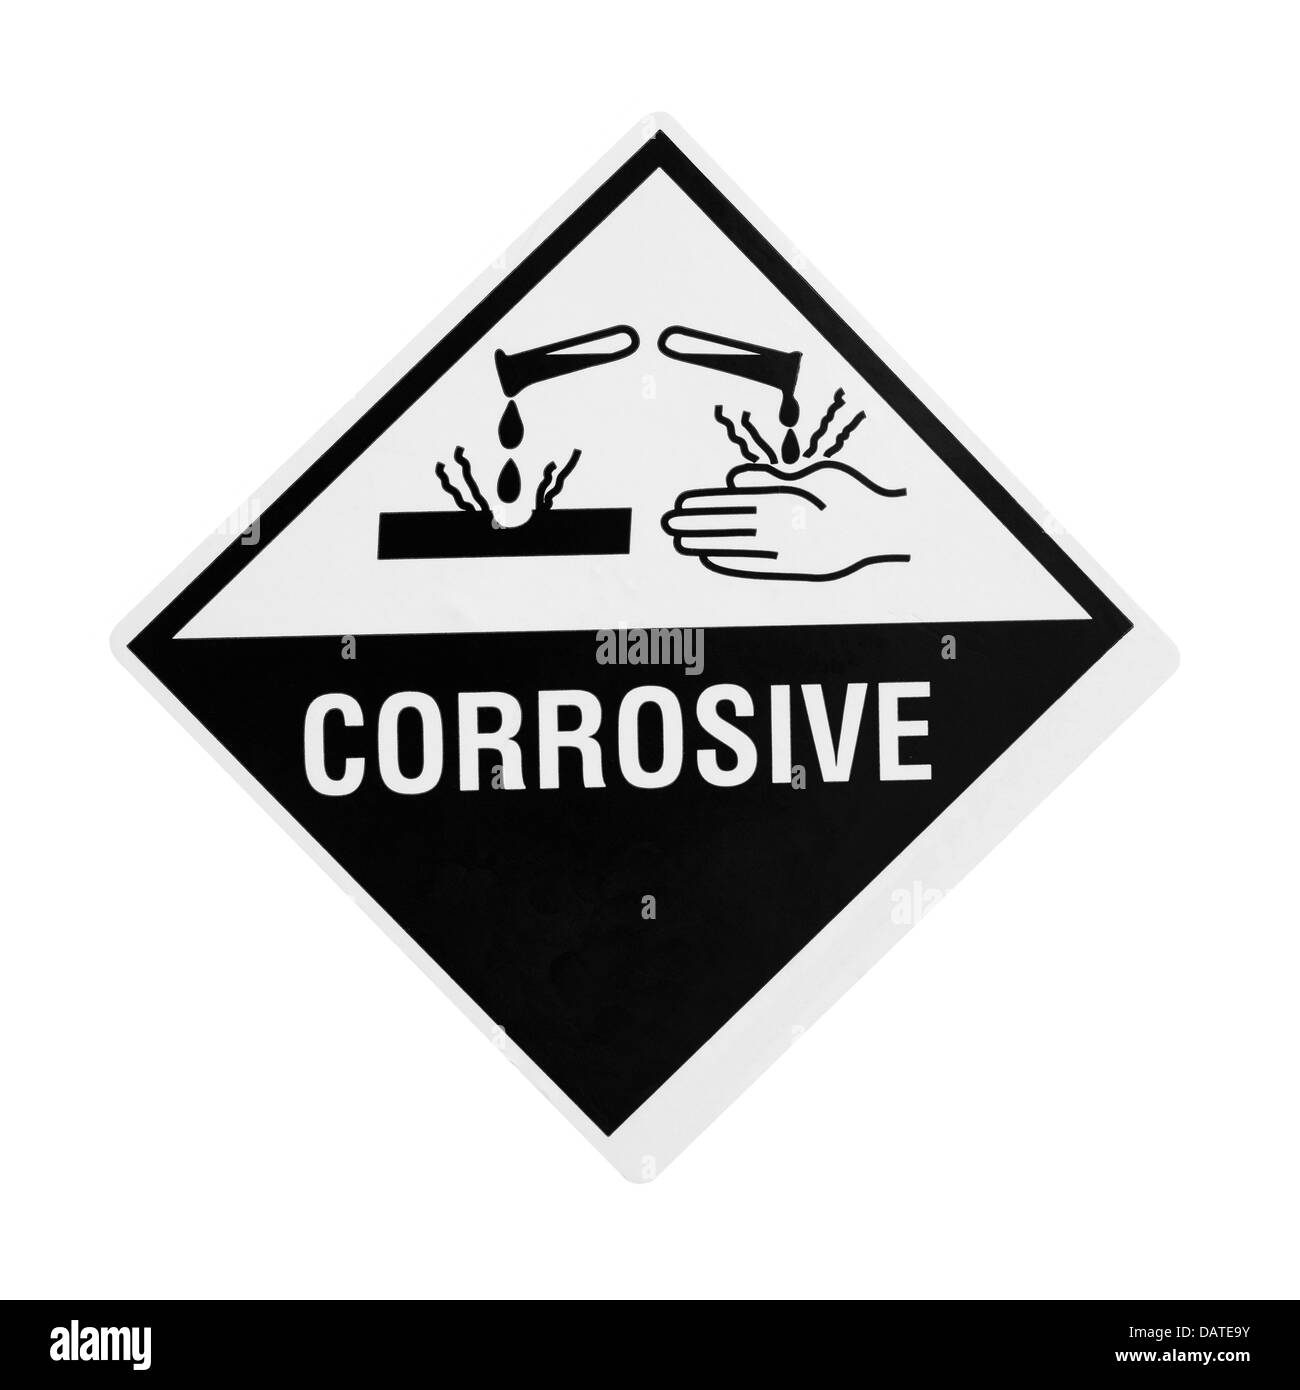 Corrosive warning sign Stock Photo